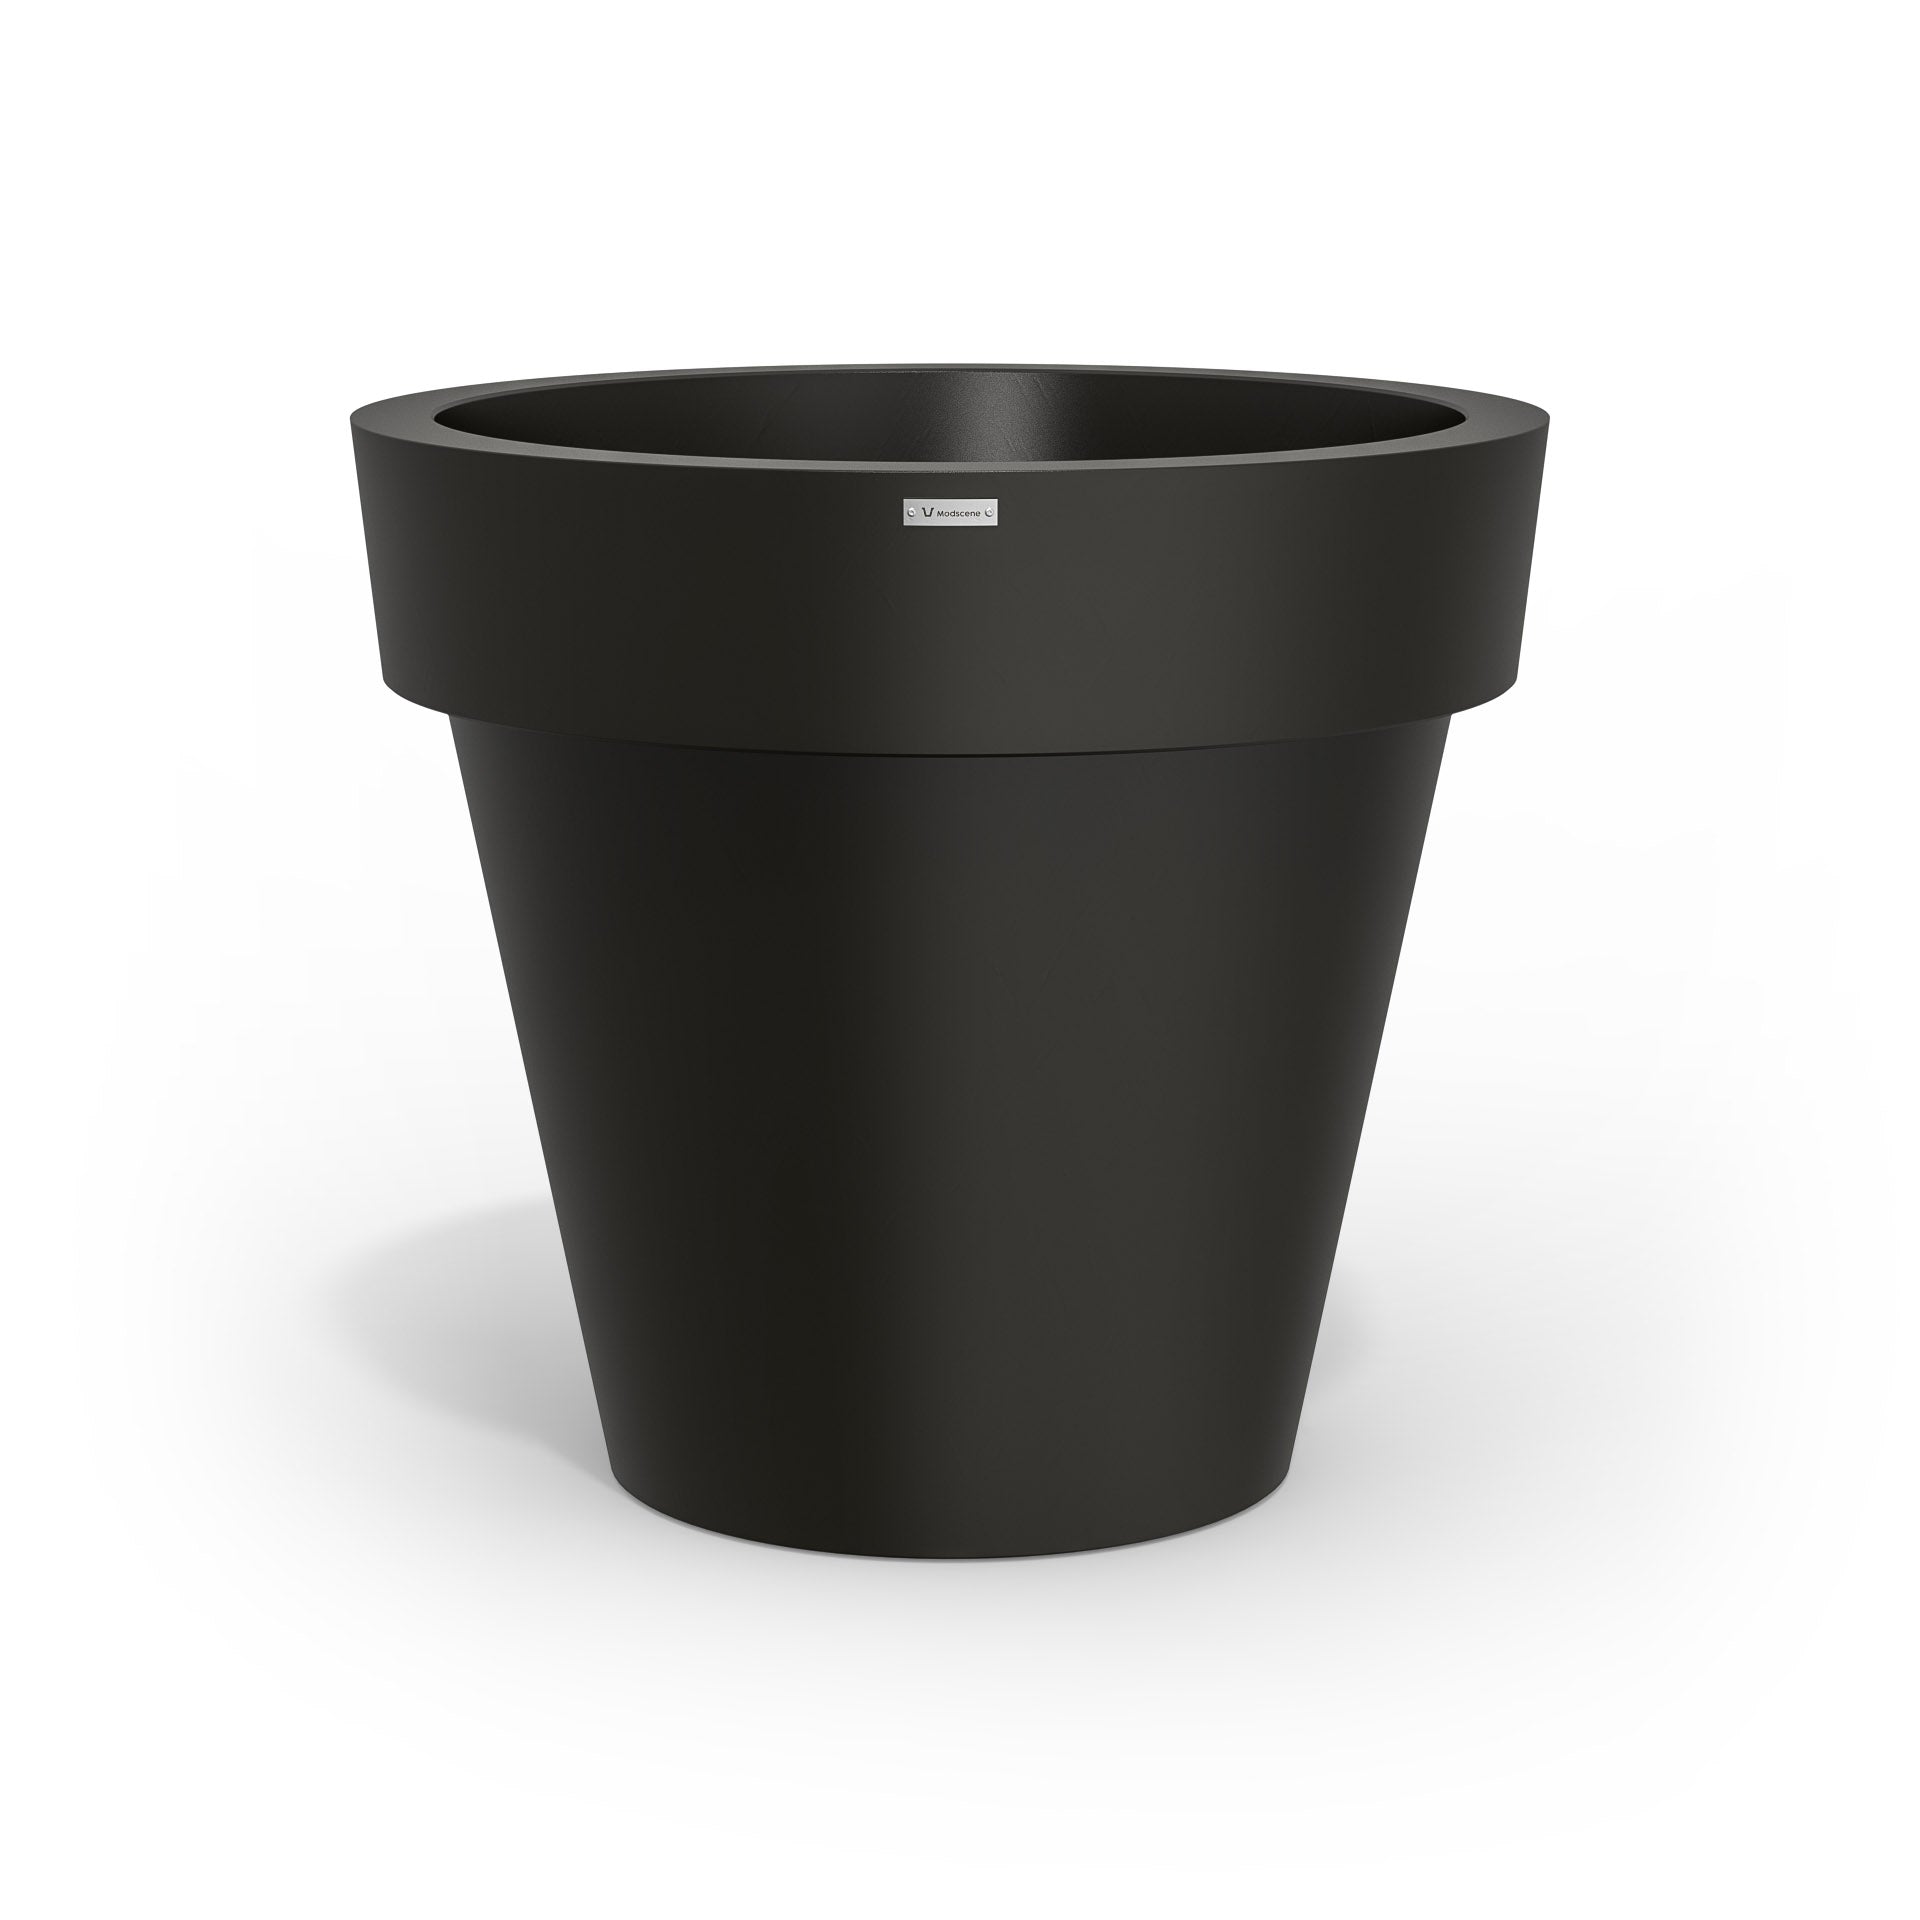 A large black planter pot made by Modscene NZ.